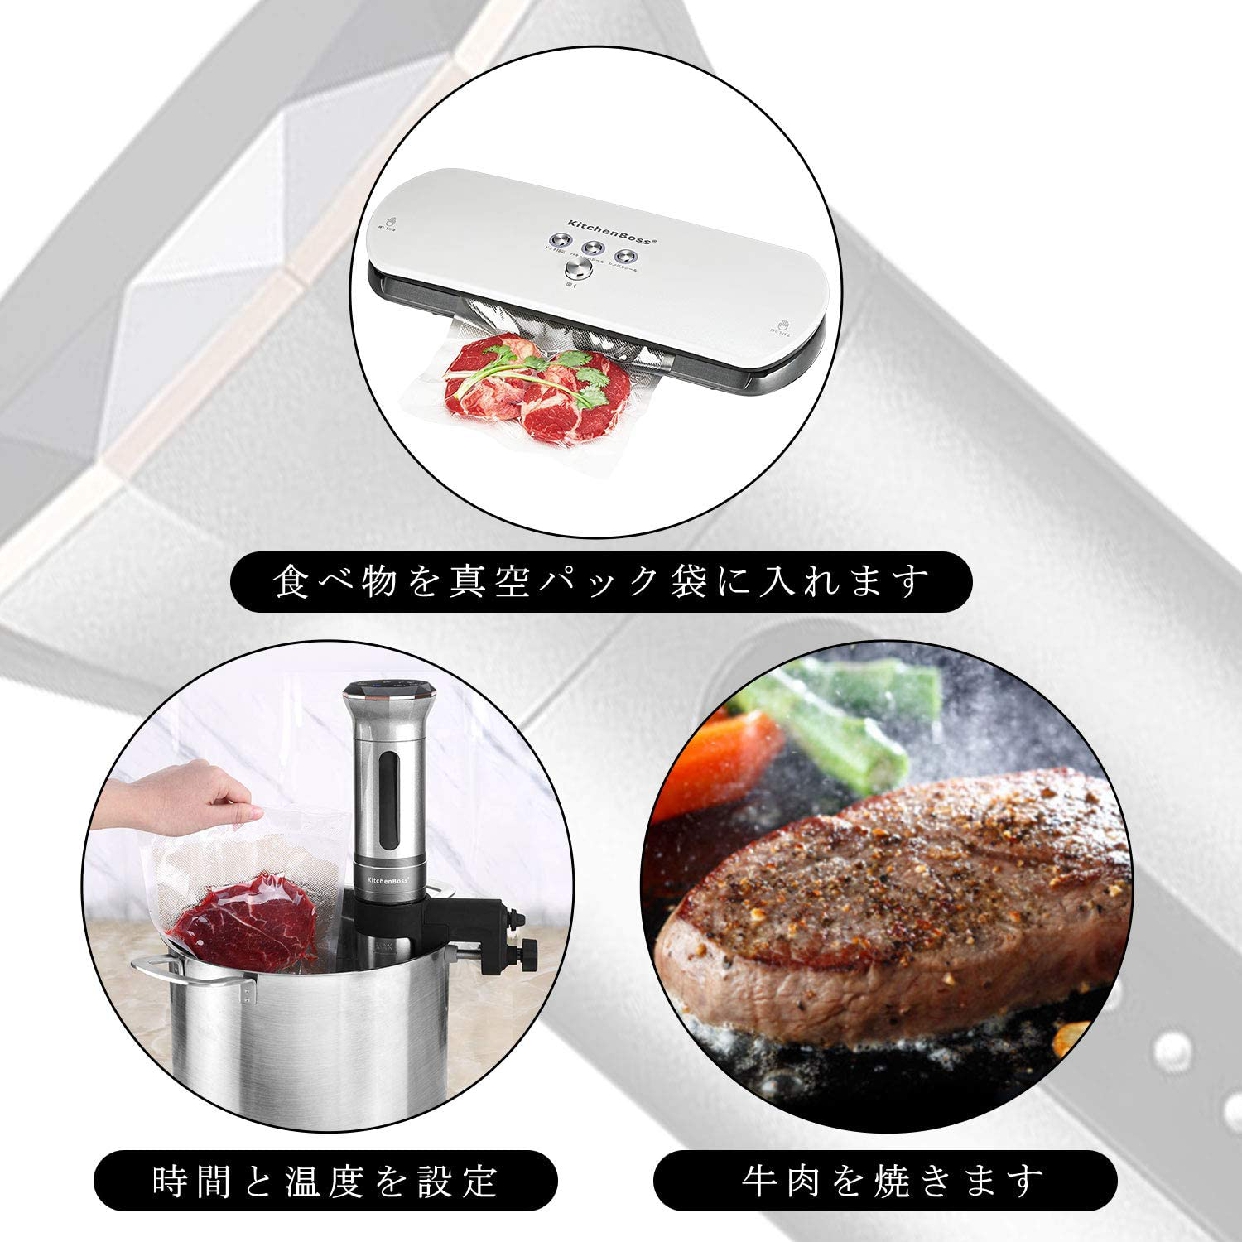 KitchenBoss(キッチンボス) 低温調理器 G300の商品画像サムネ7 